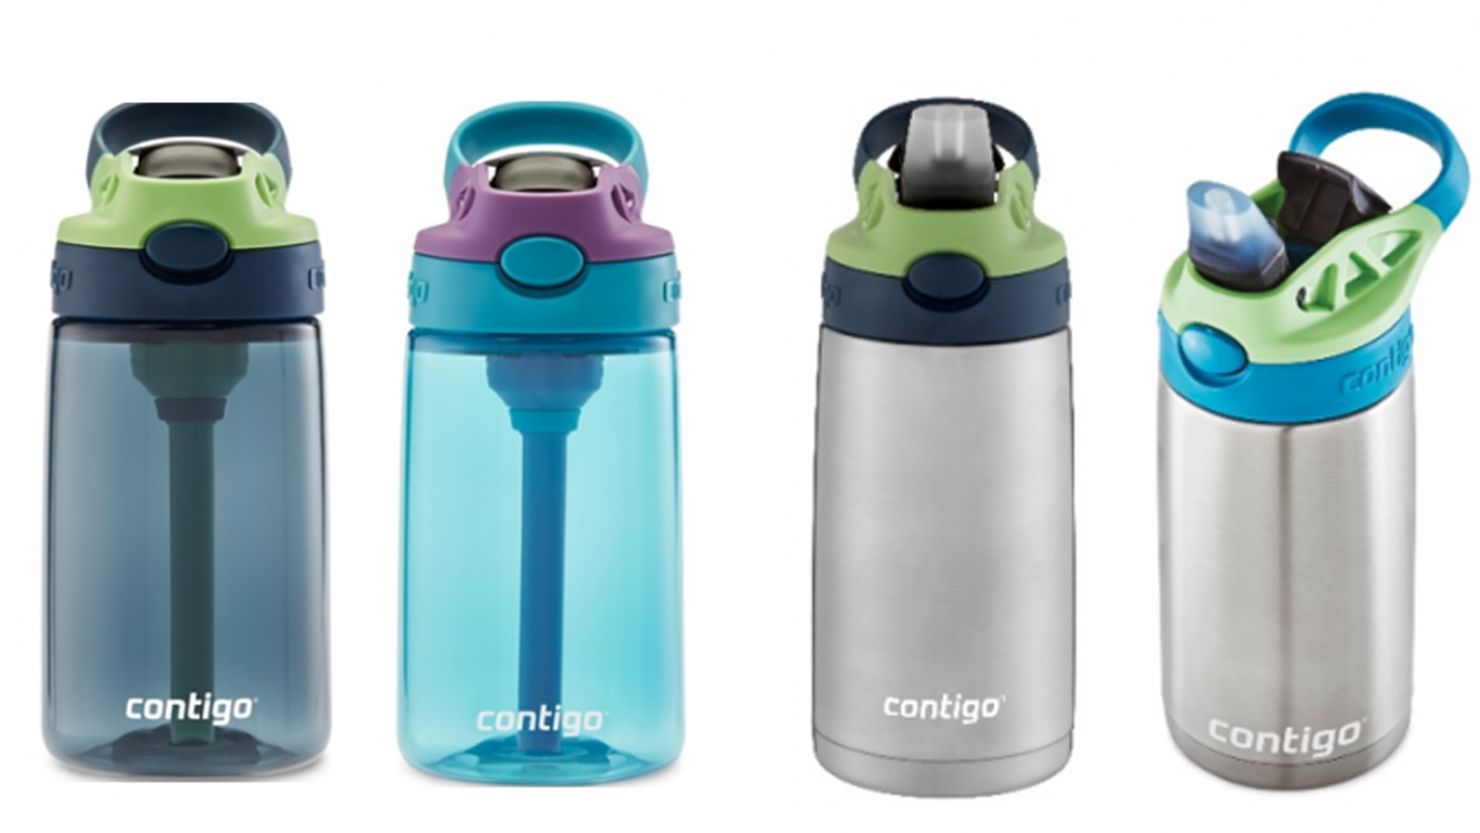 Contigo recalls cleanable water bottles for kids over choking